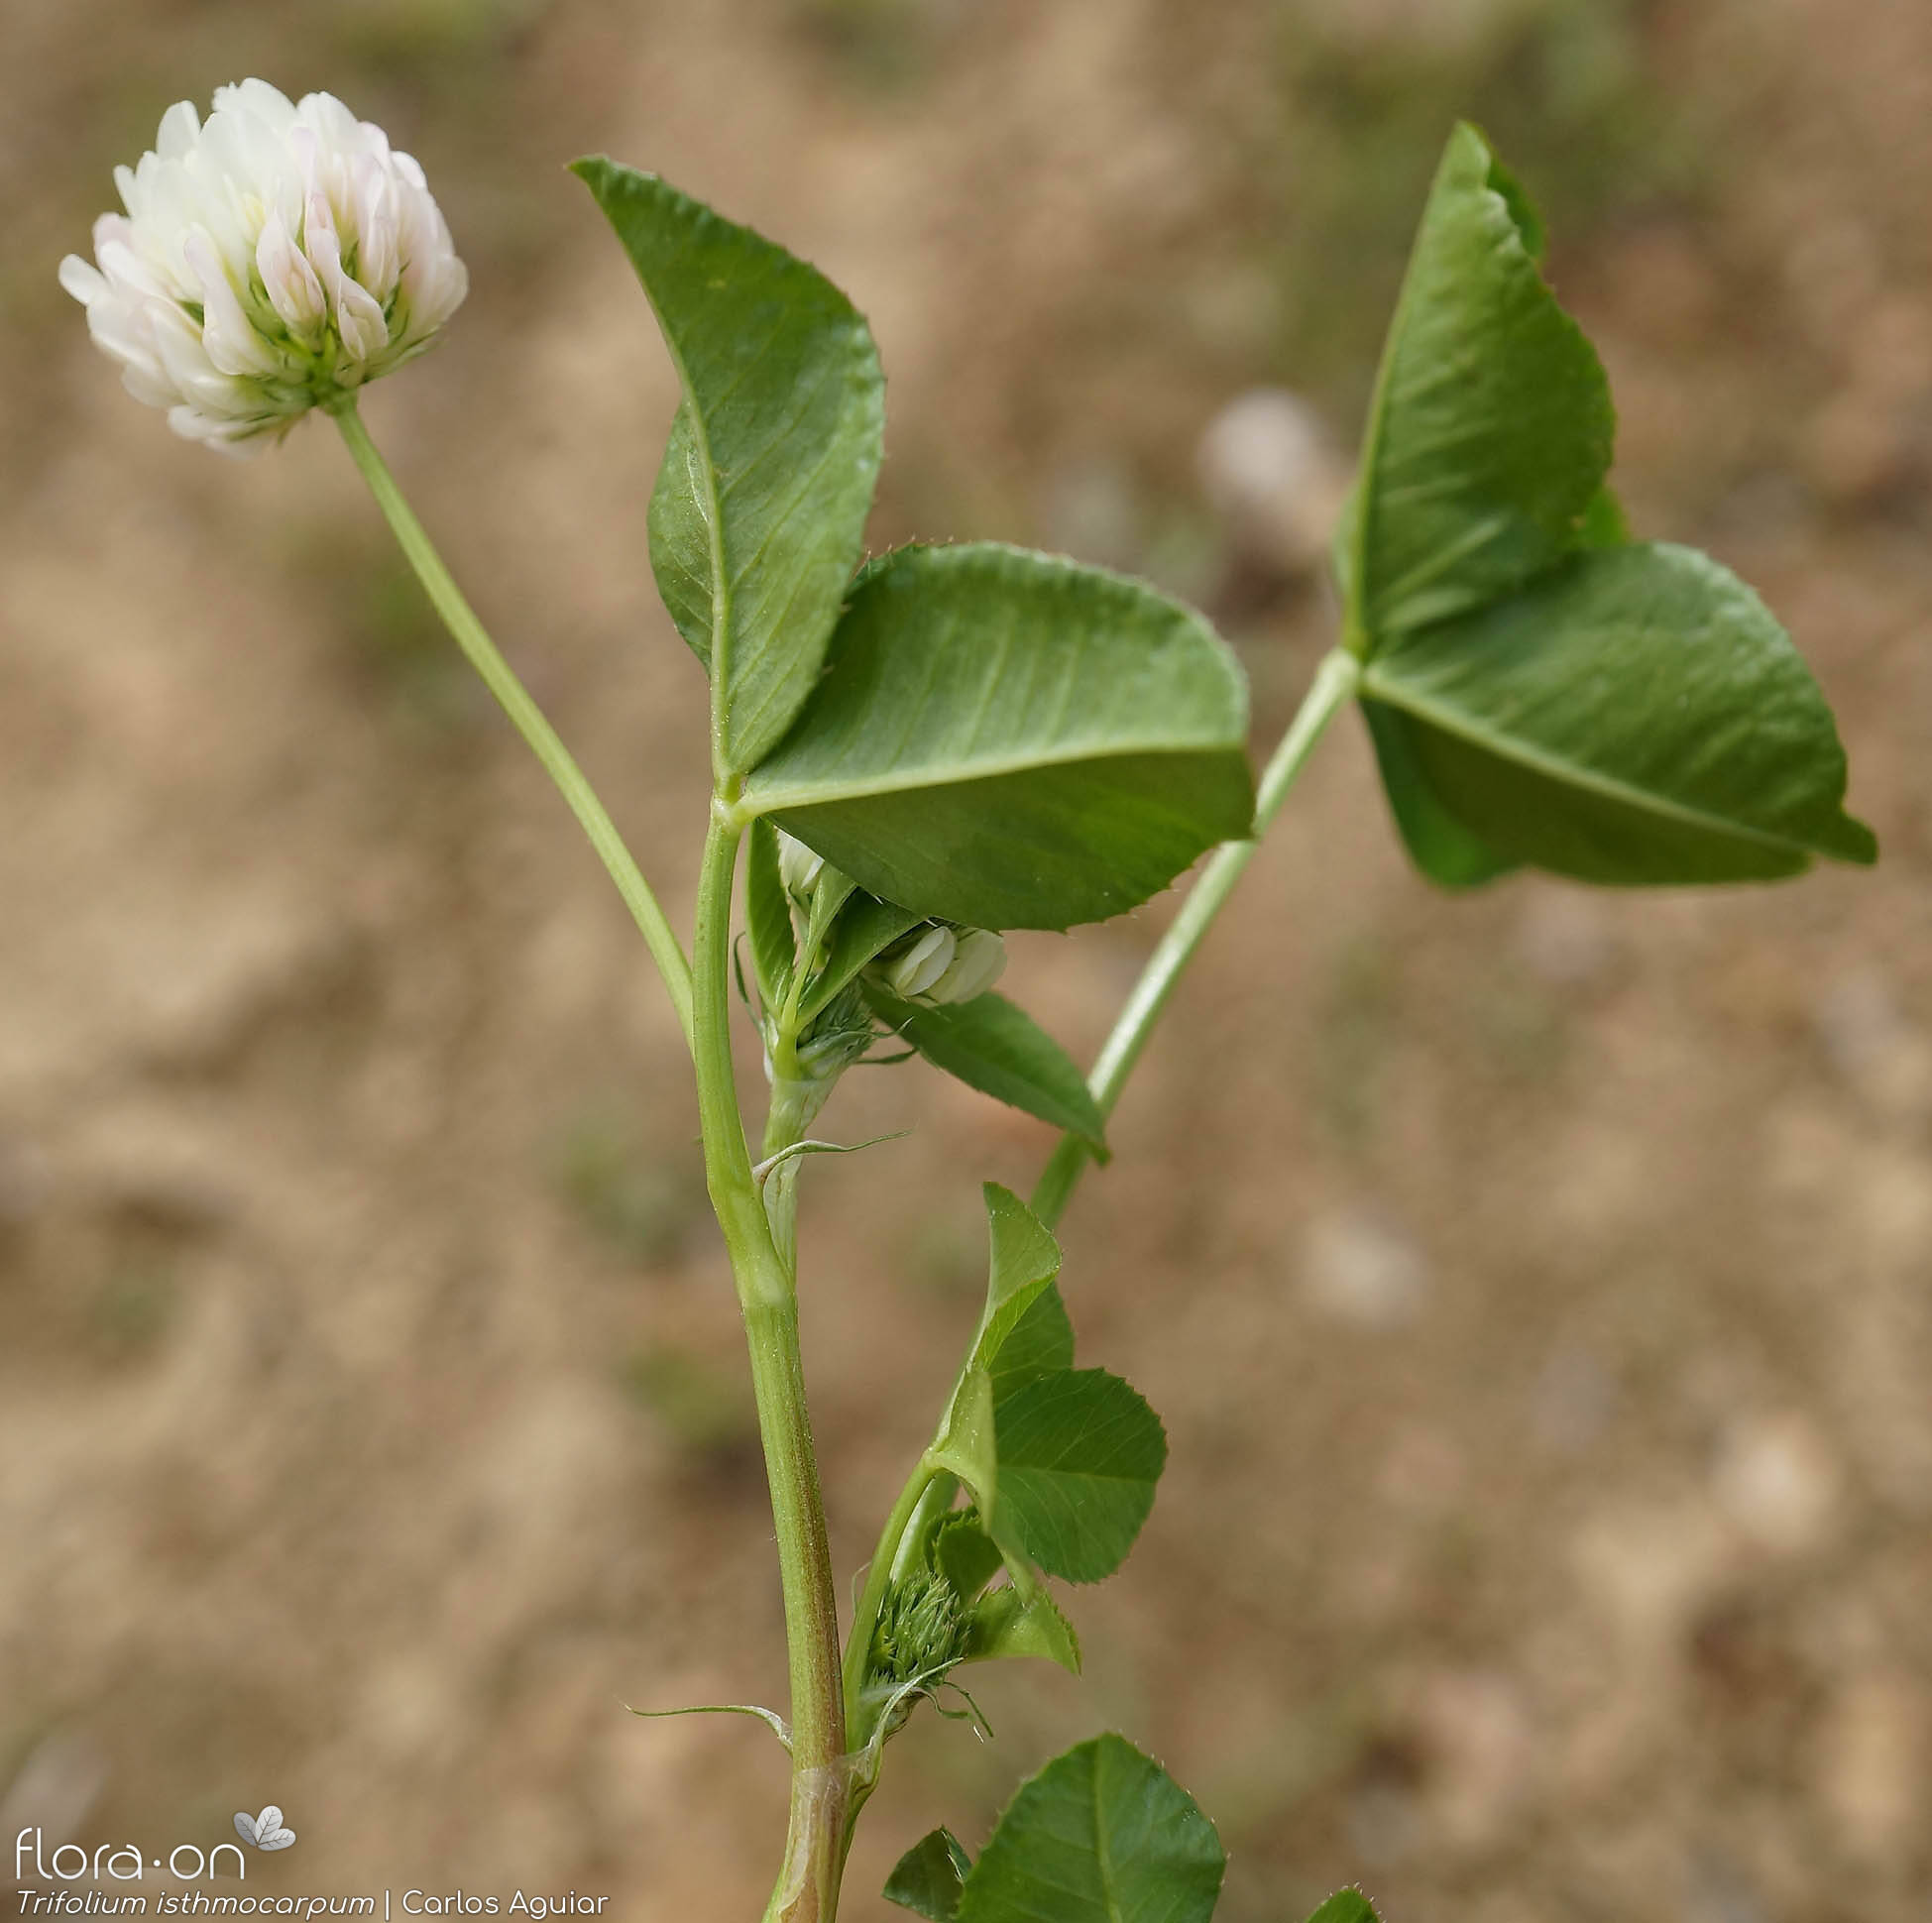 Trifolium isthmocarpum - Folha (geral) | Carlos Aguiar; CC BY-NC 4.0